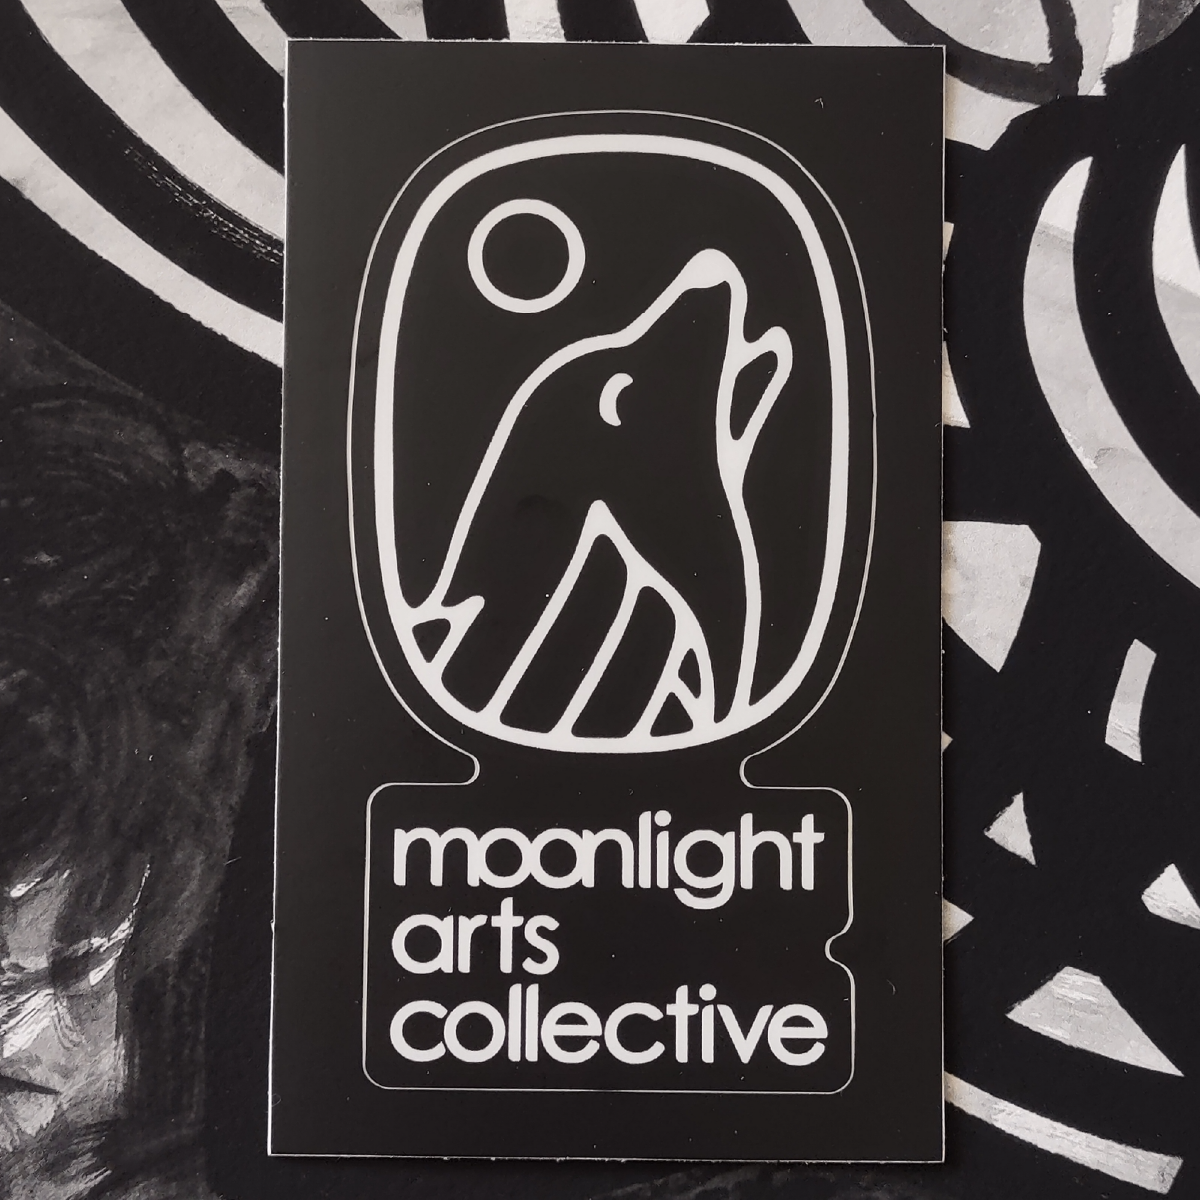 moonlight arts collective sticker - white logo on black background